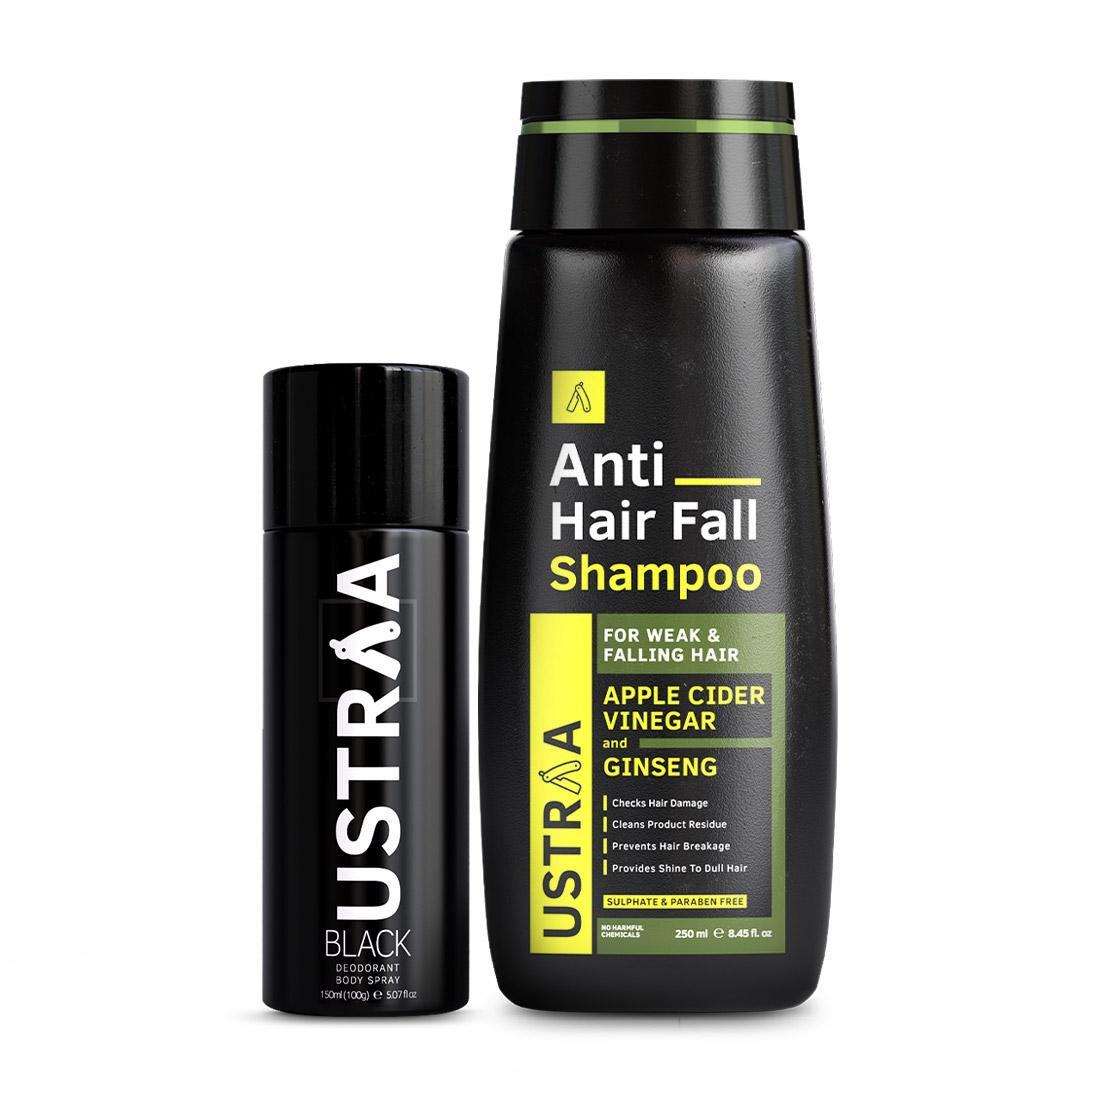 Ustraa Anti Hair Fall Shampoo and Black Deodorant Combo For Men